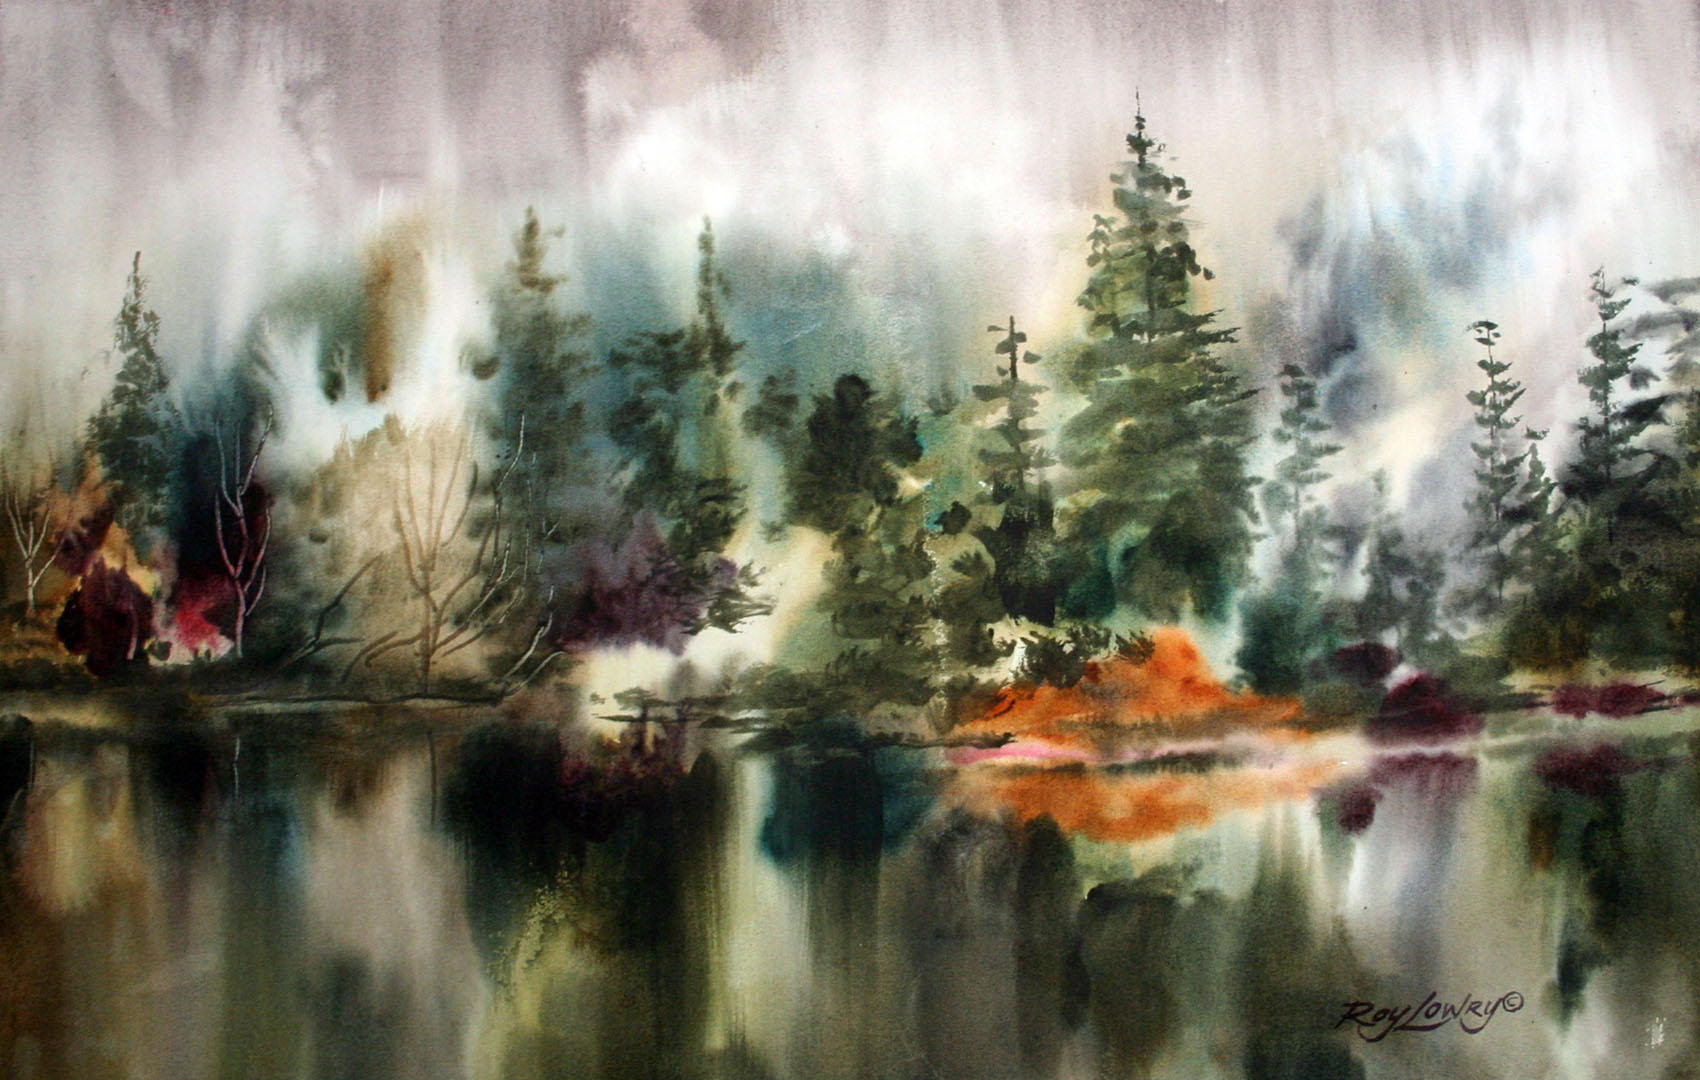 Lake Sylvia Reflection, Watercolor on paper, 22 x 15